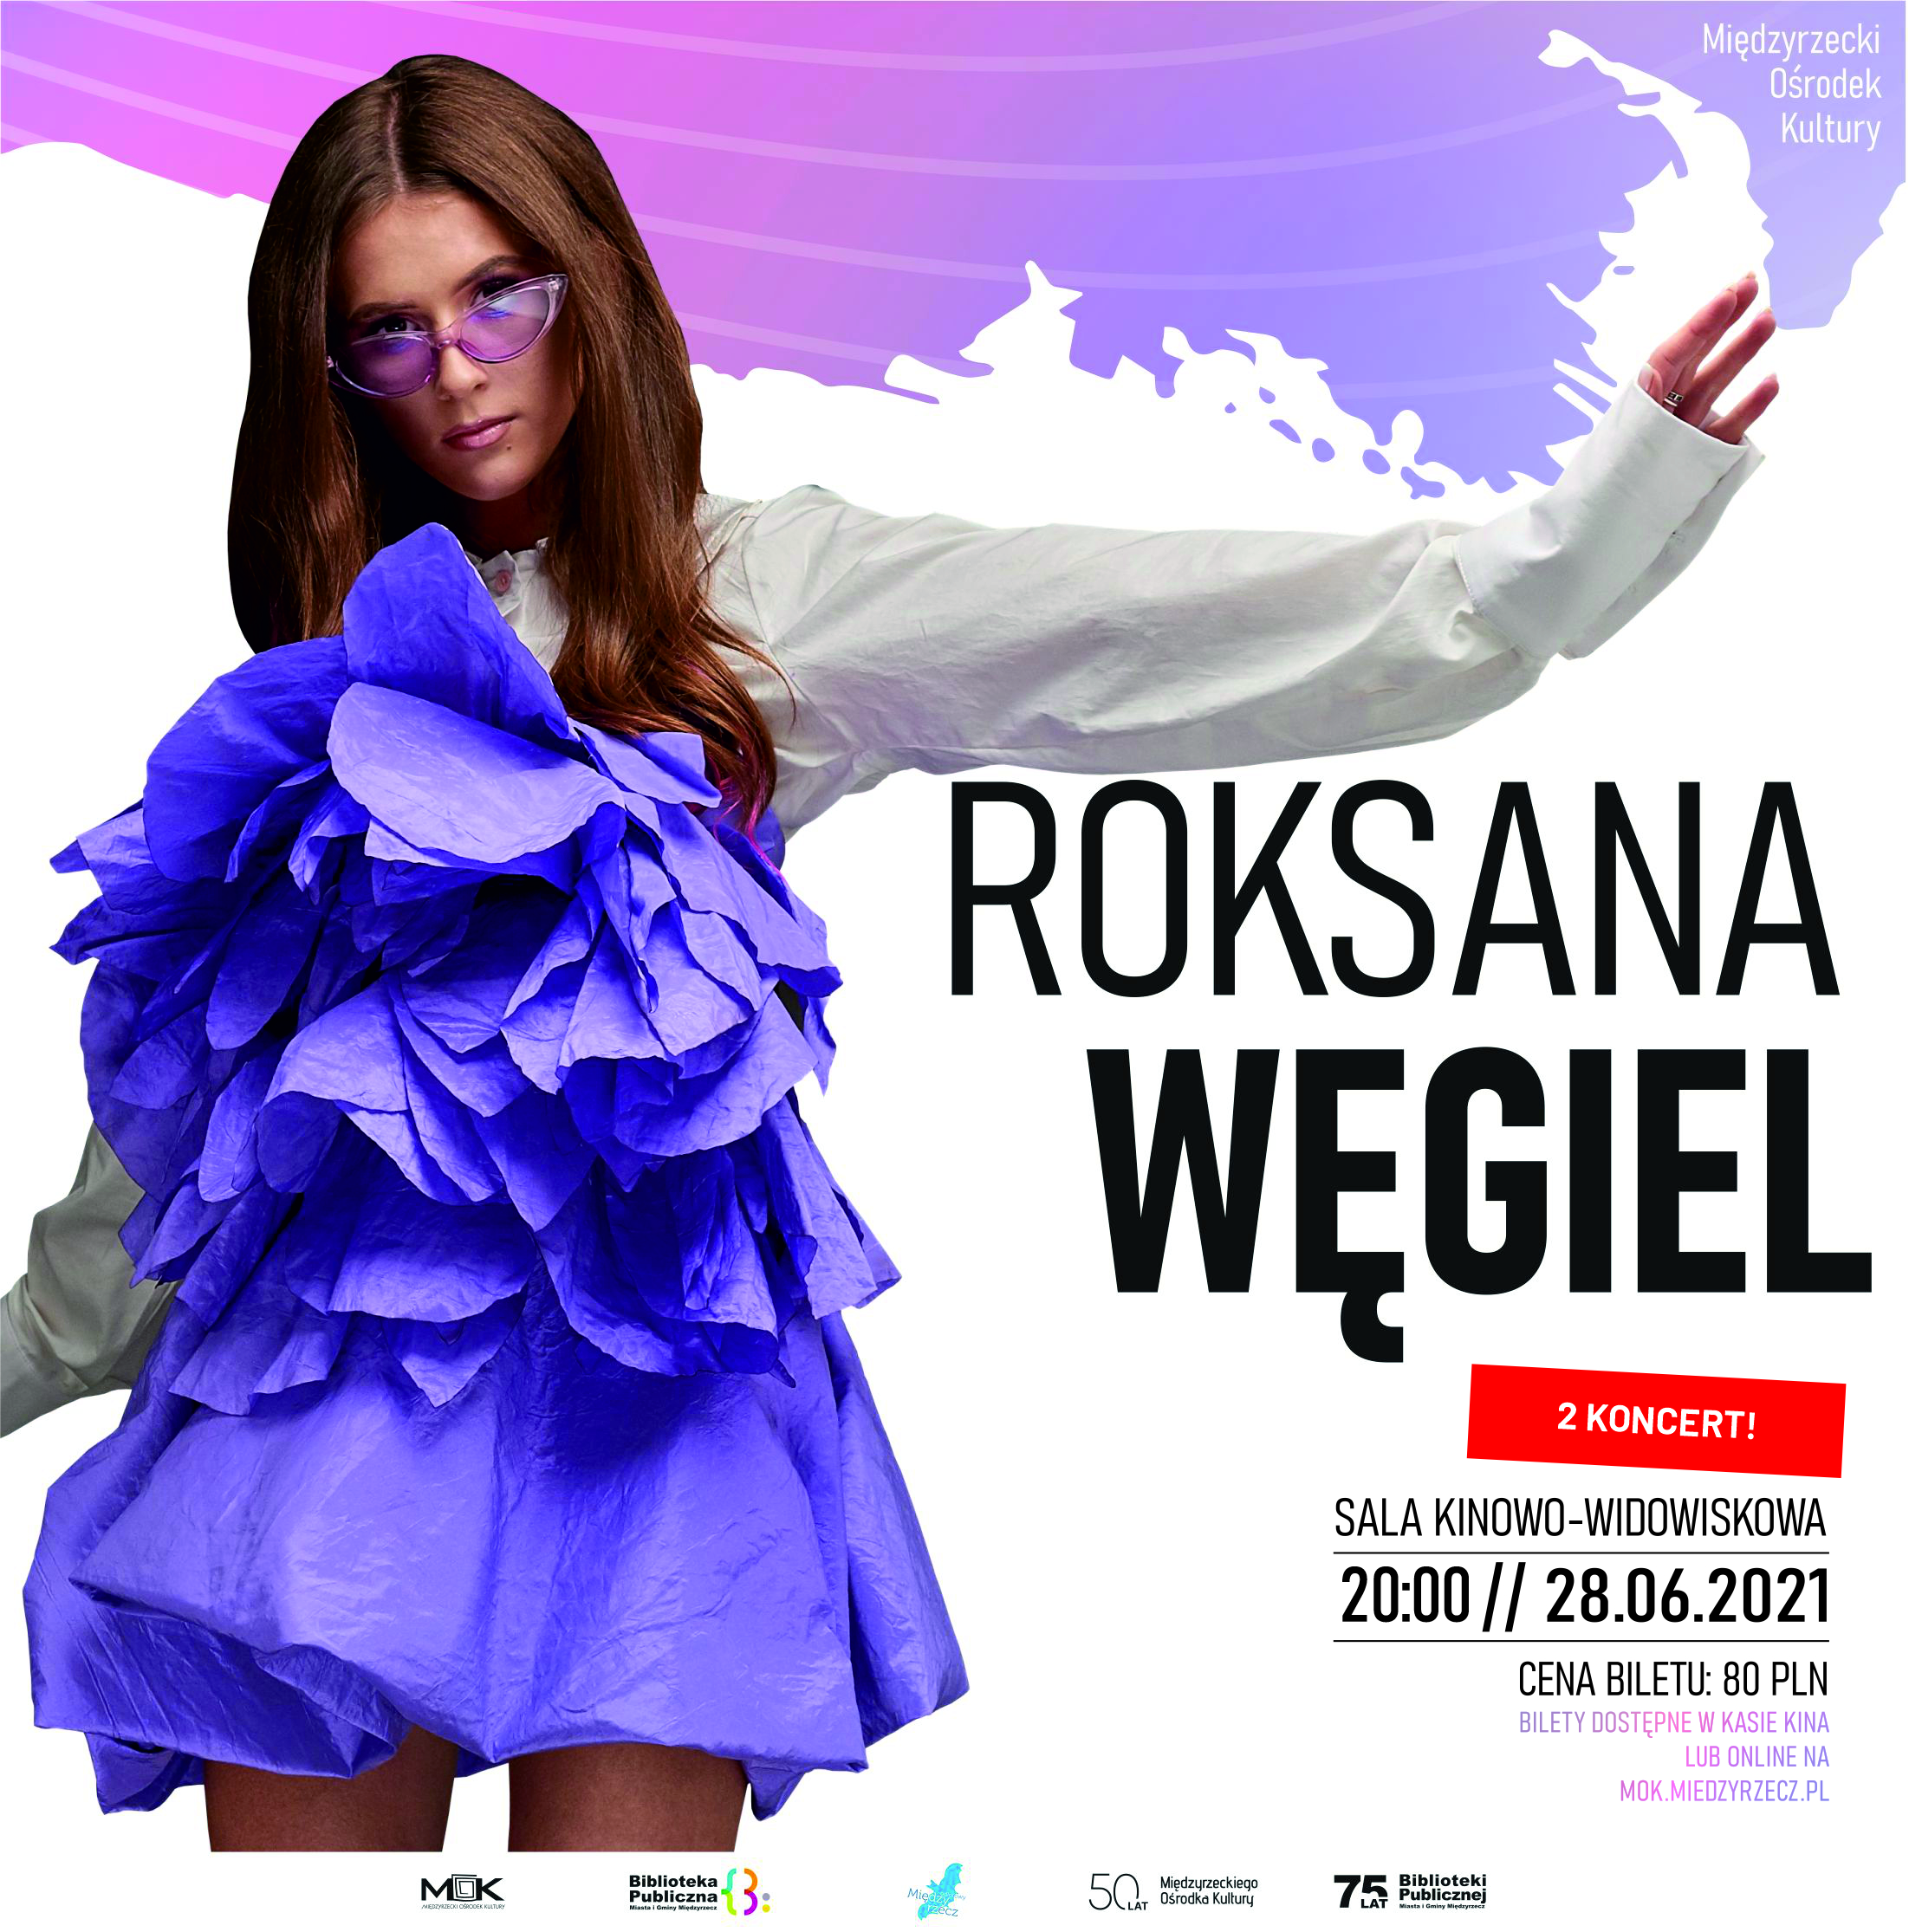 Grafika promująca drugi koncert Roksany Węgiel